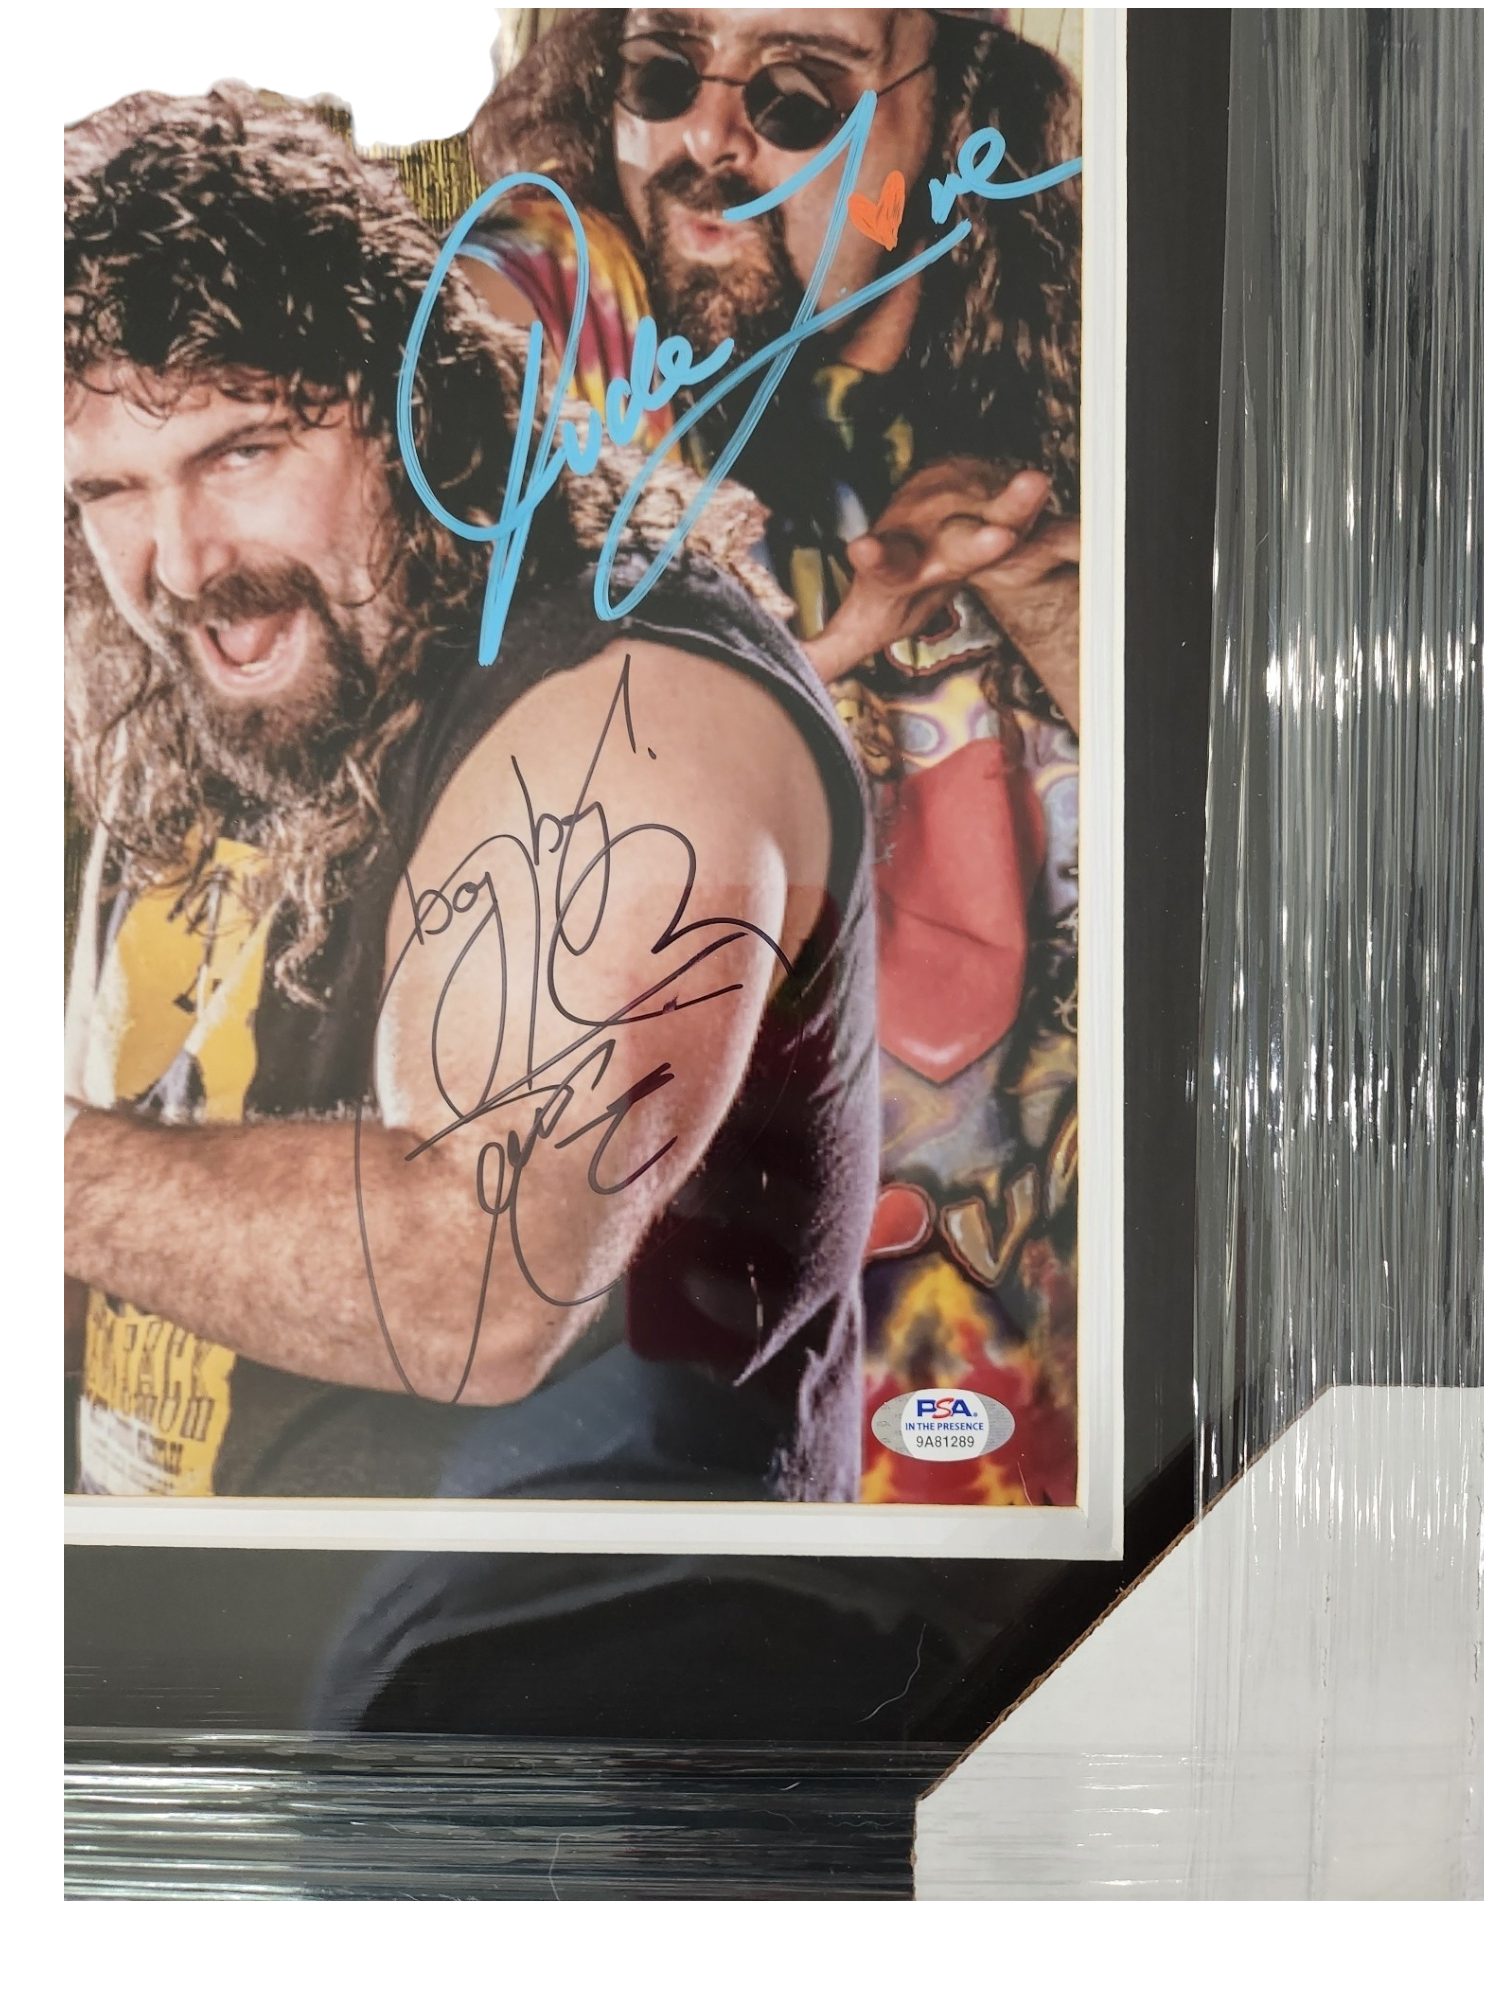 Framed signed Mick Foley Photo